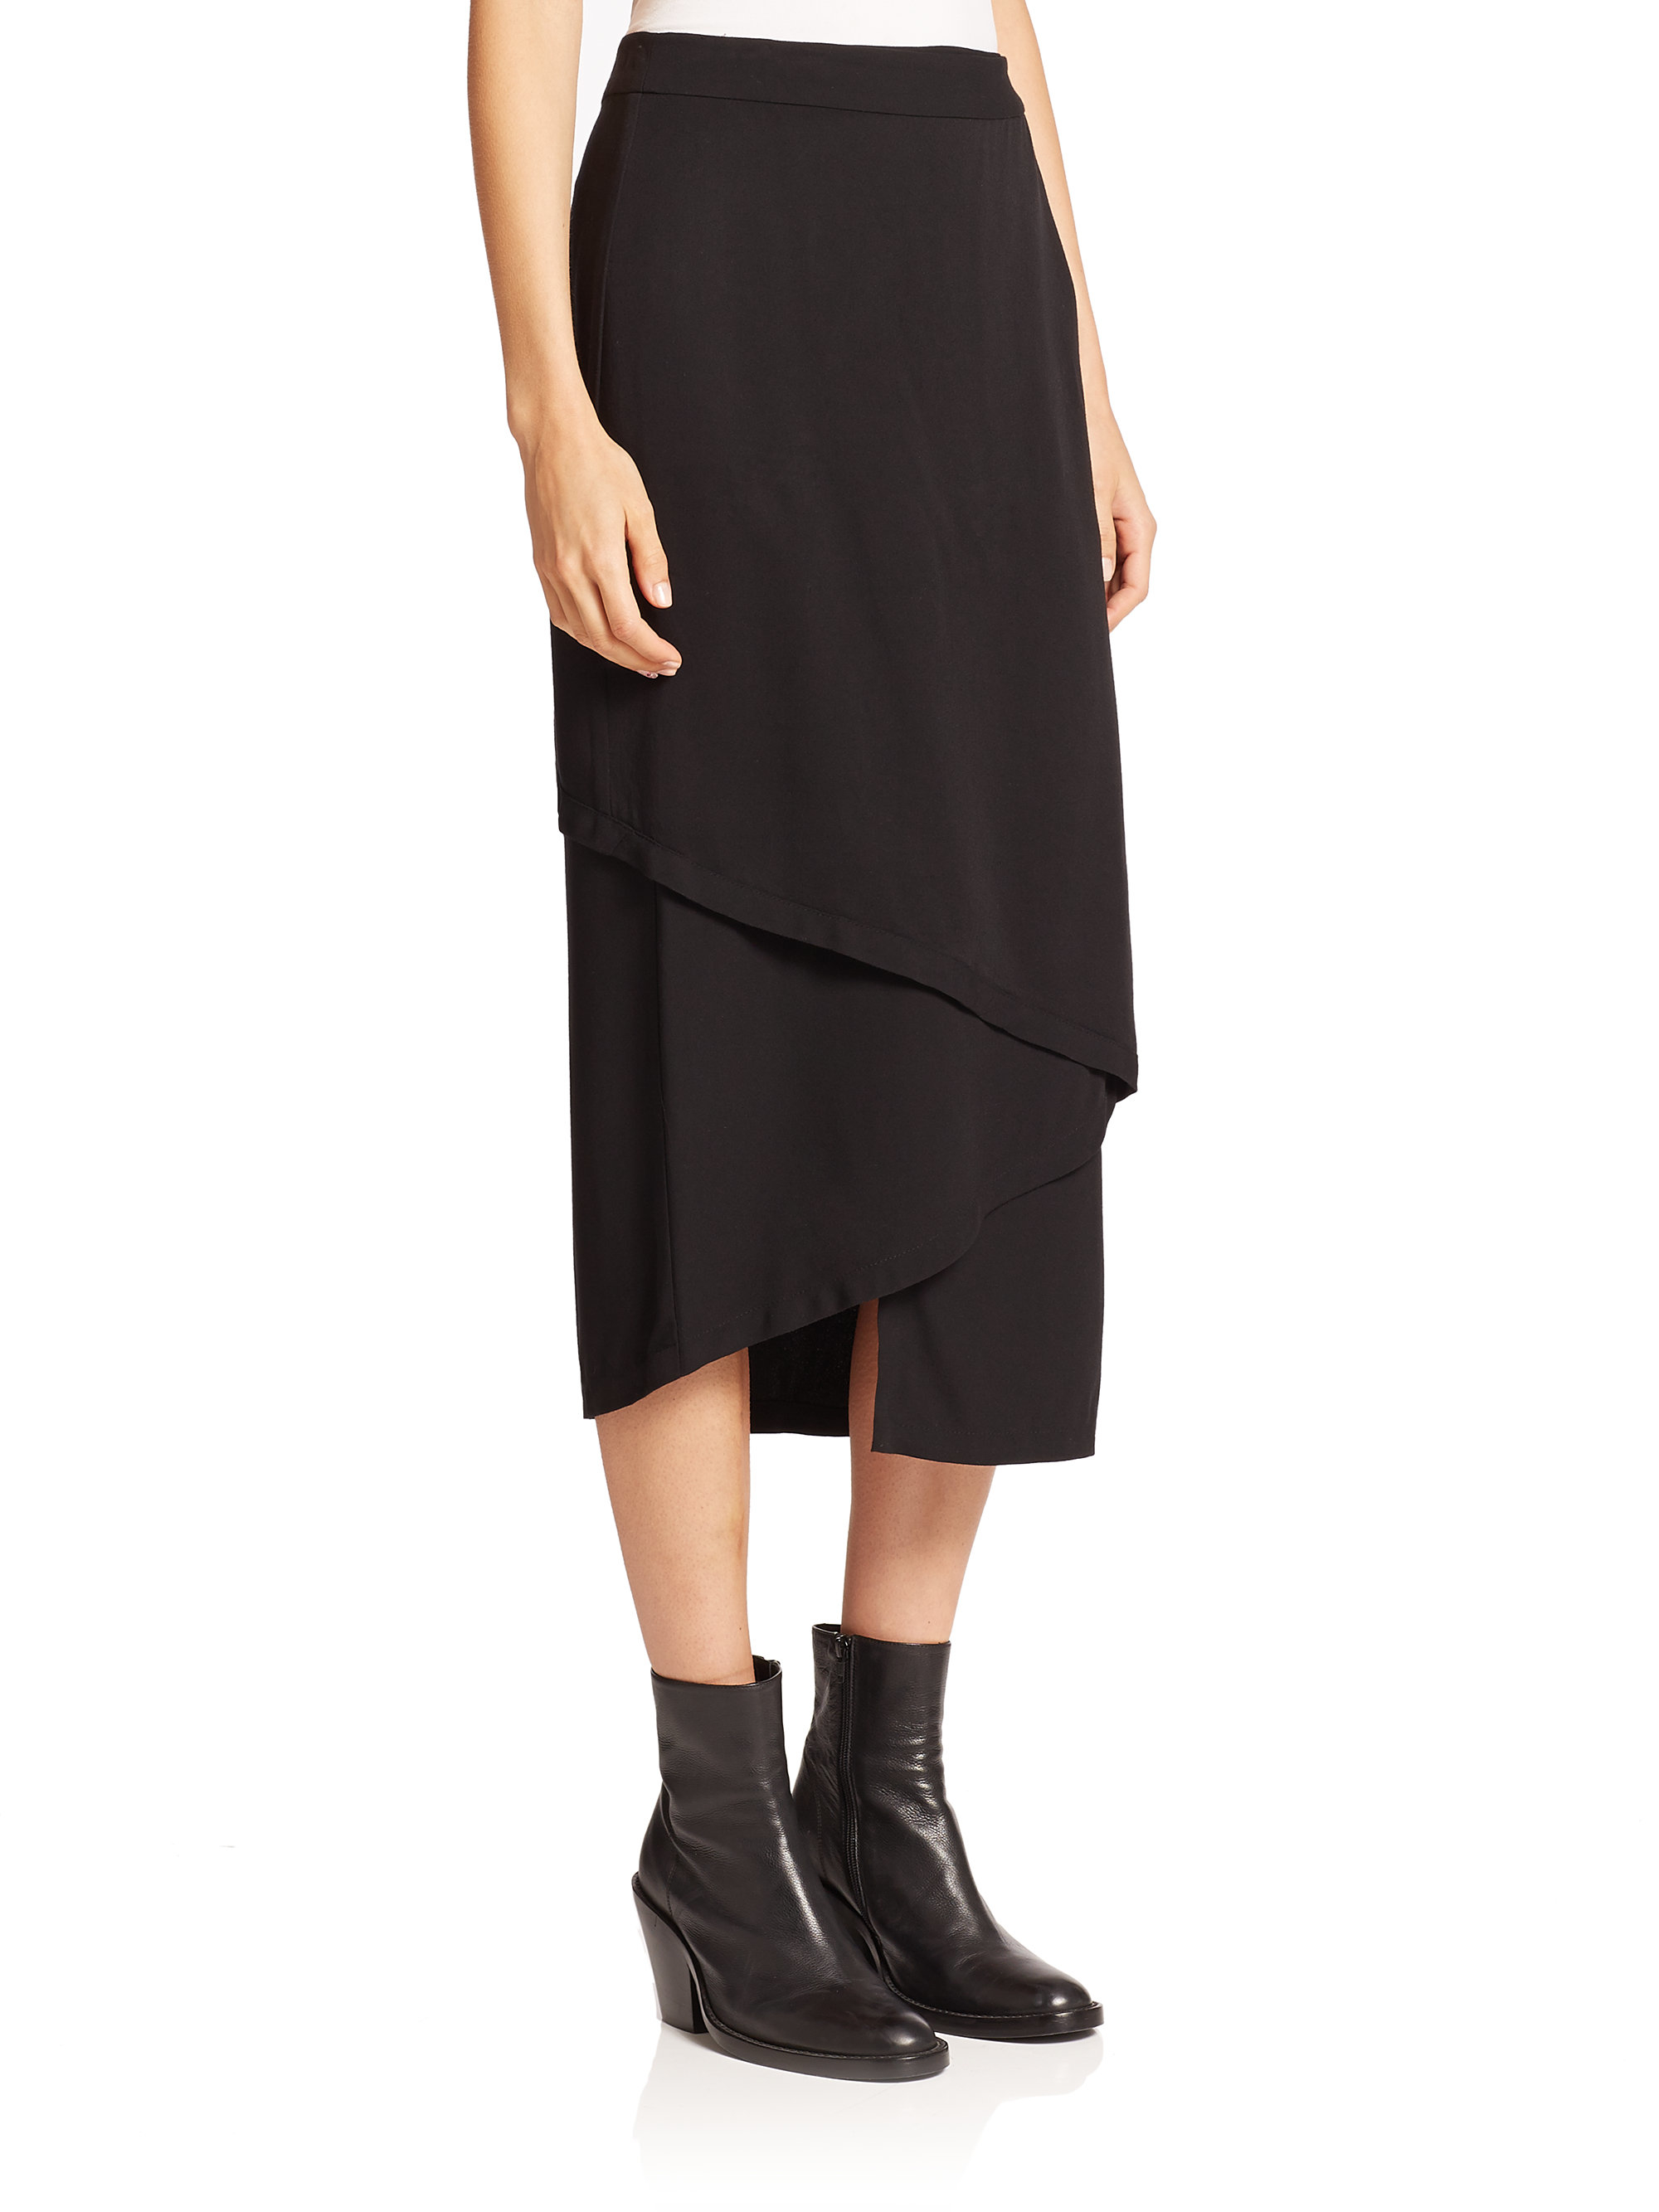 Lyst - Dkny Midi Wrap Skirt in Black